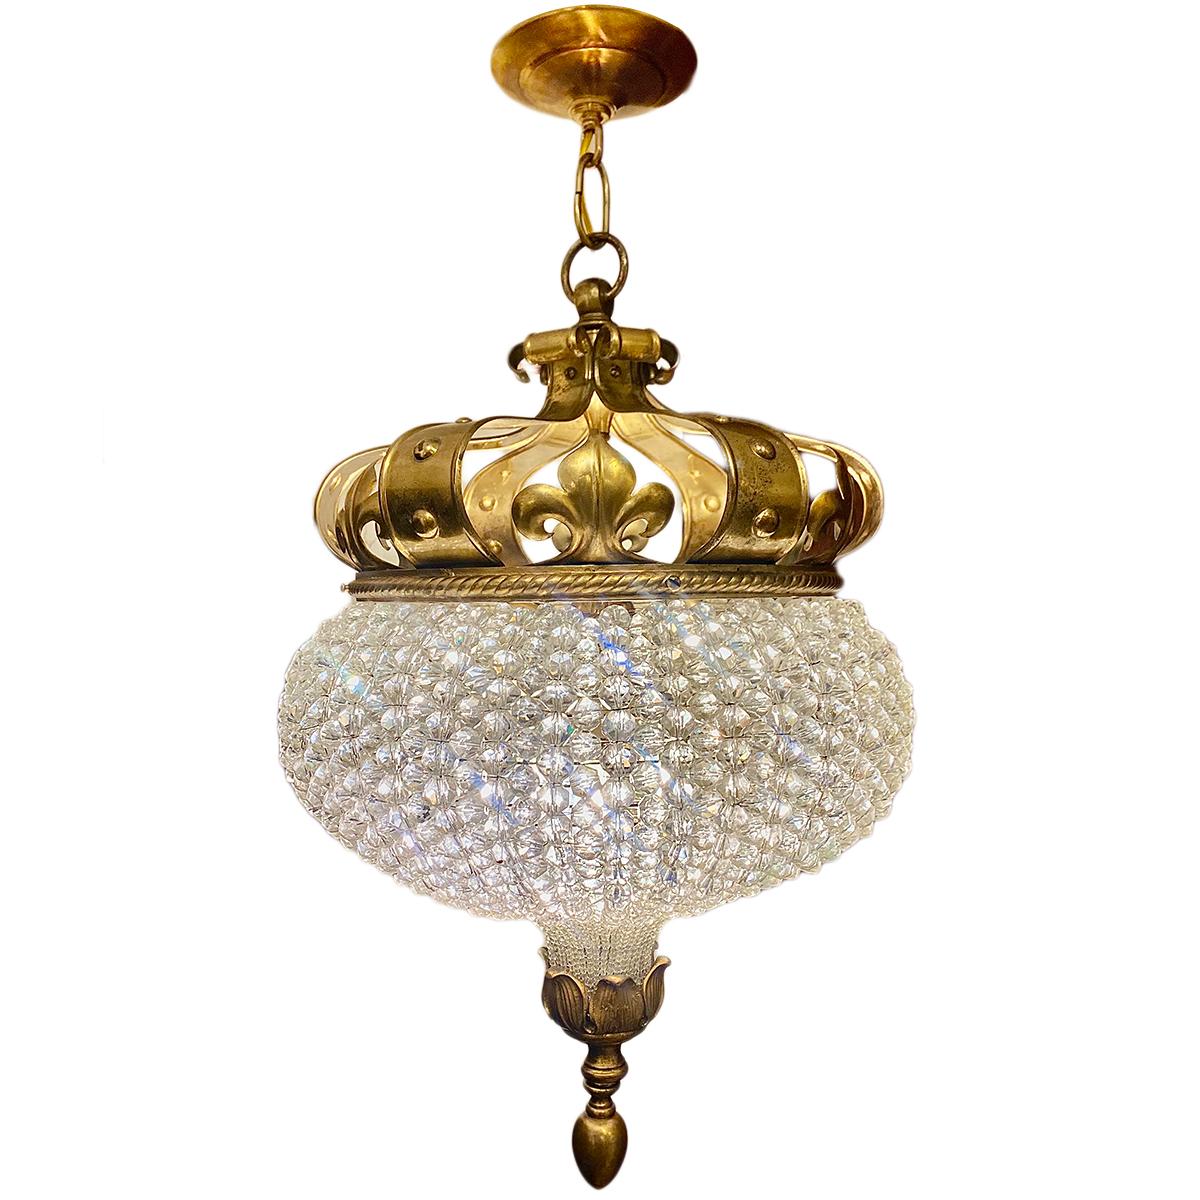 A circa 1900 French gilt bronze and crystal lantern.

Measurements:
Diameter: 16.5